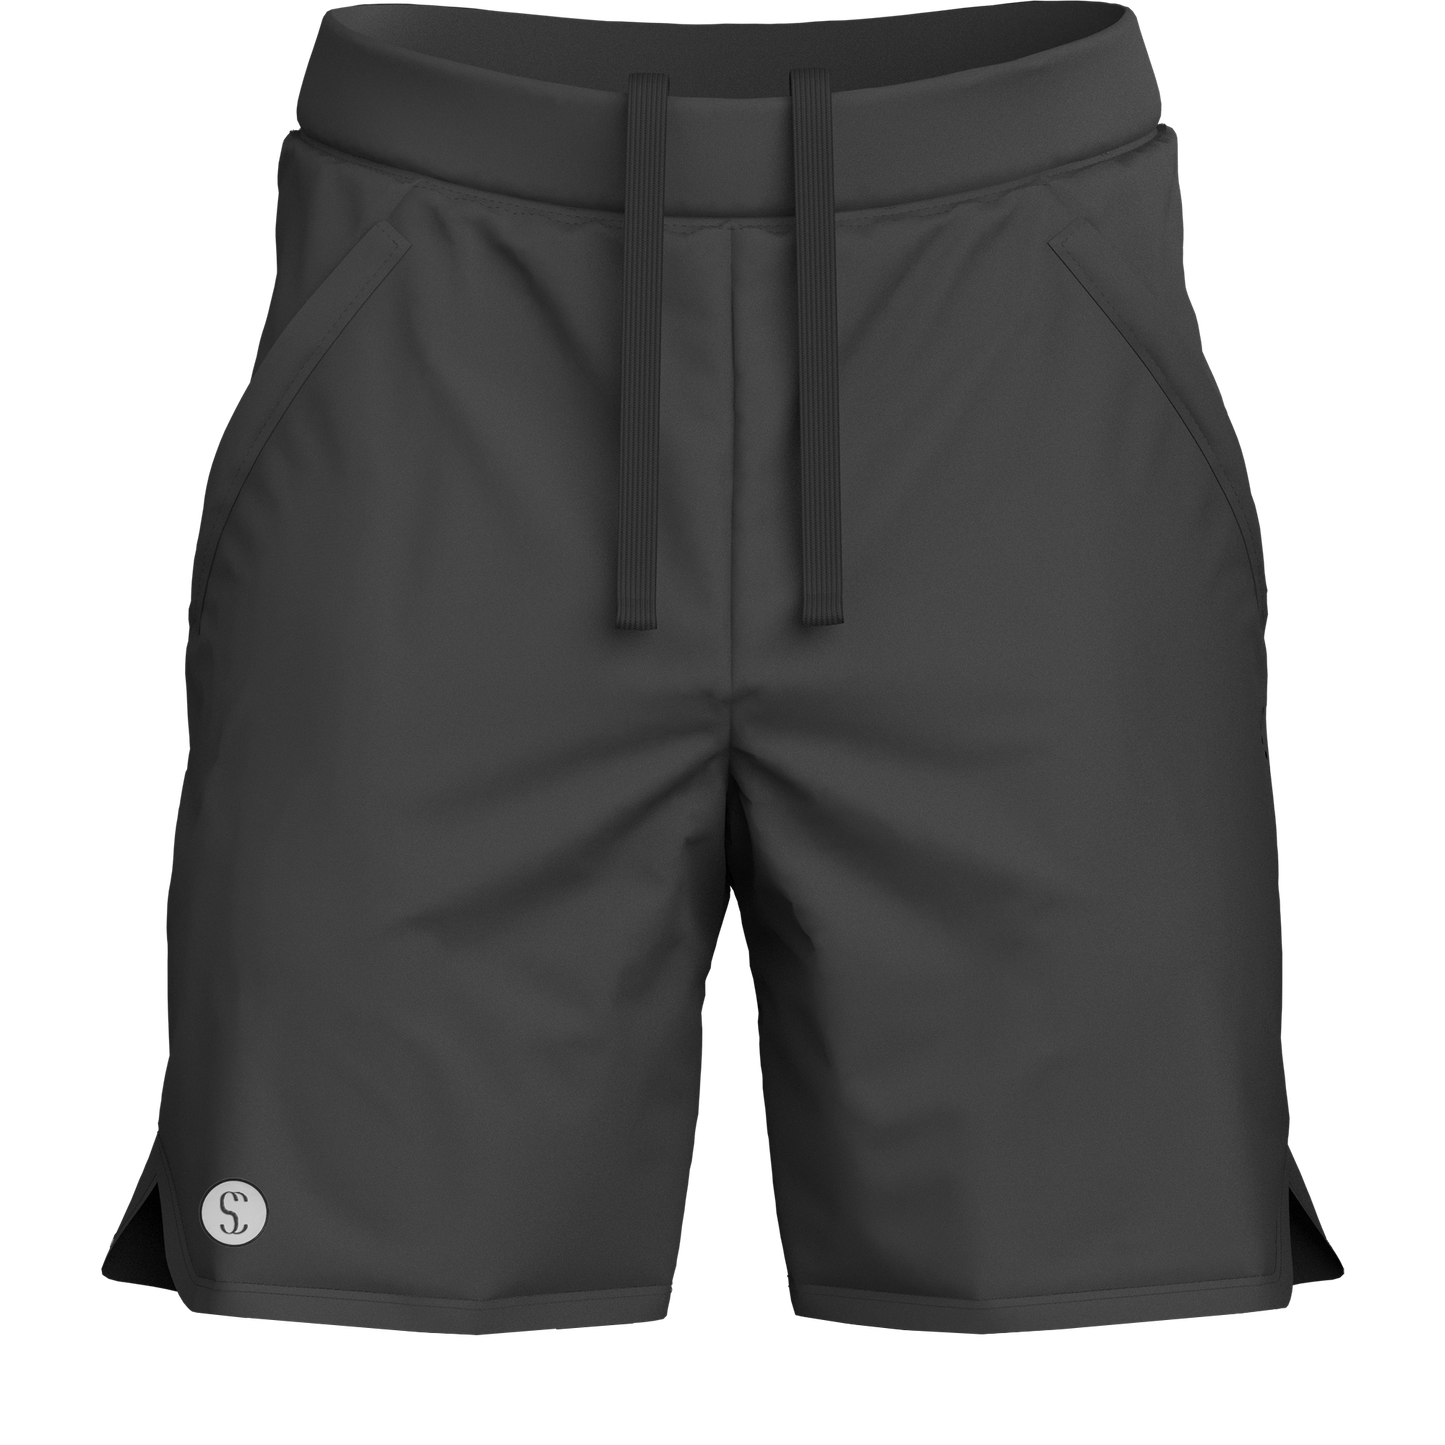 Men's Grey Sports Shorts for Running & Gym